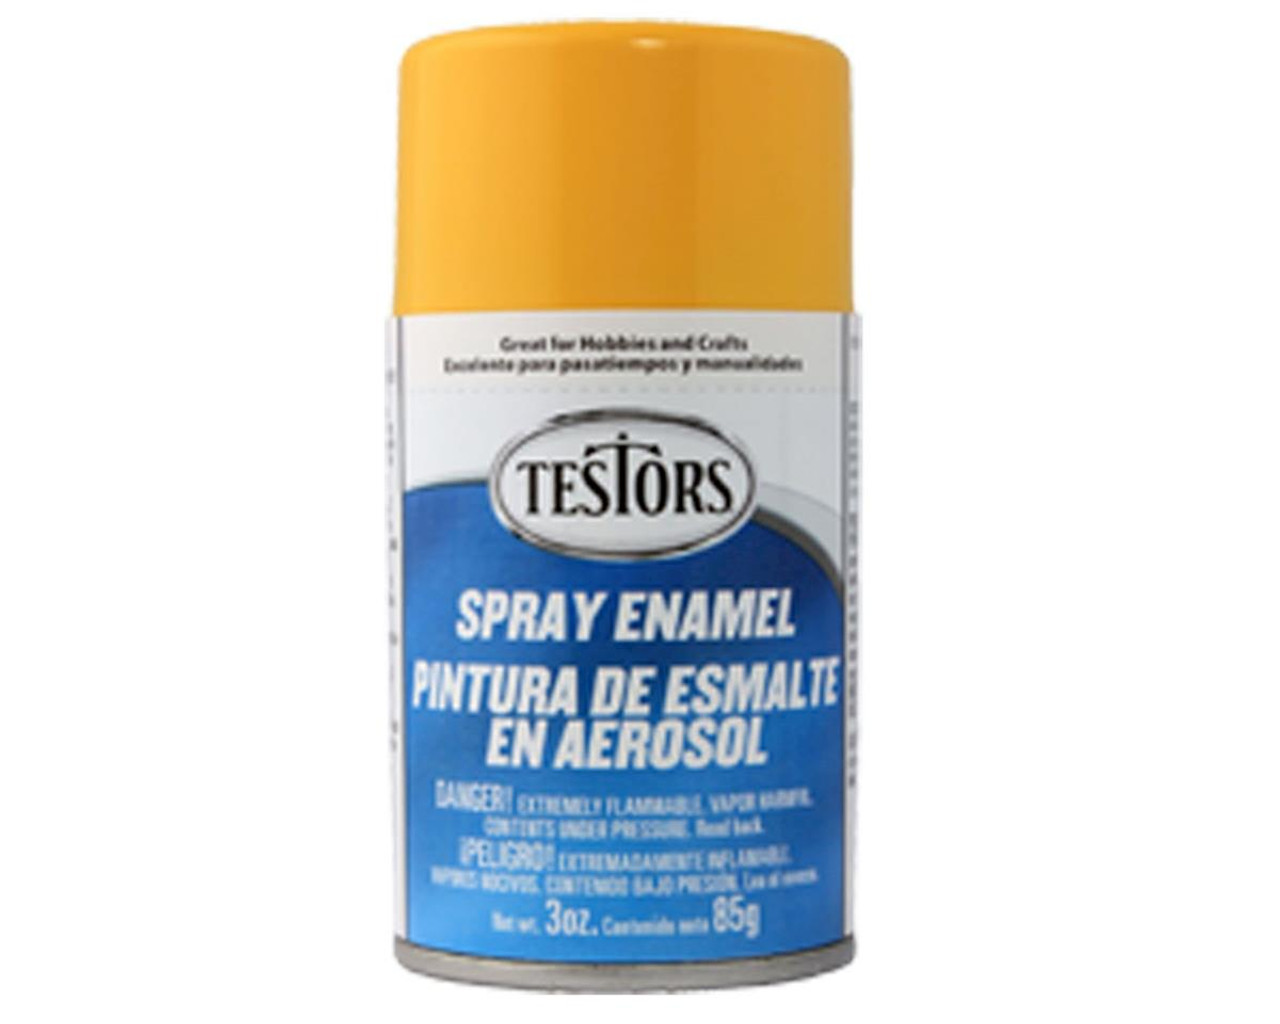 Testors Yellow Enamel Spray Paint 3oz